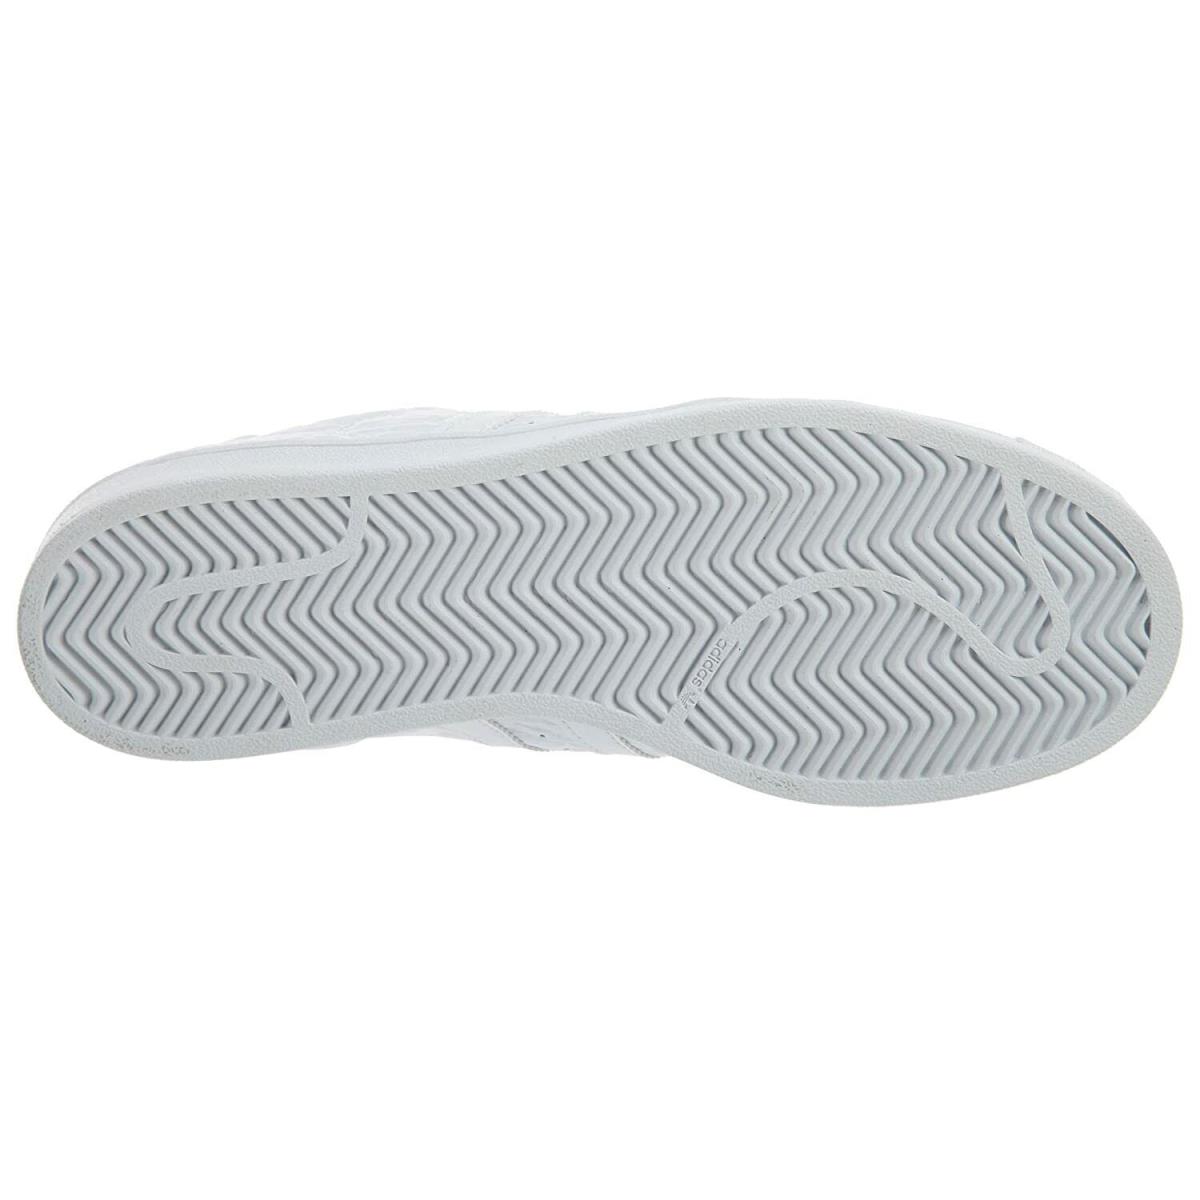 Adidas shoes Originals Superstar Croc - White 5